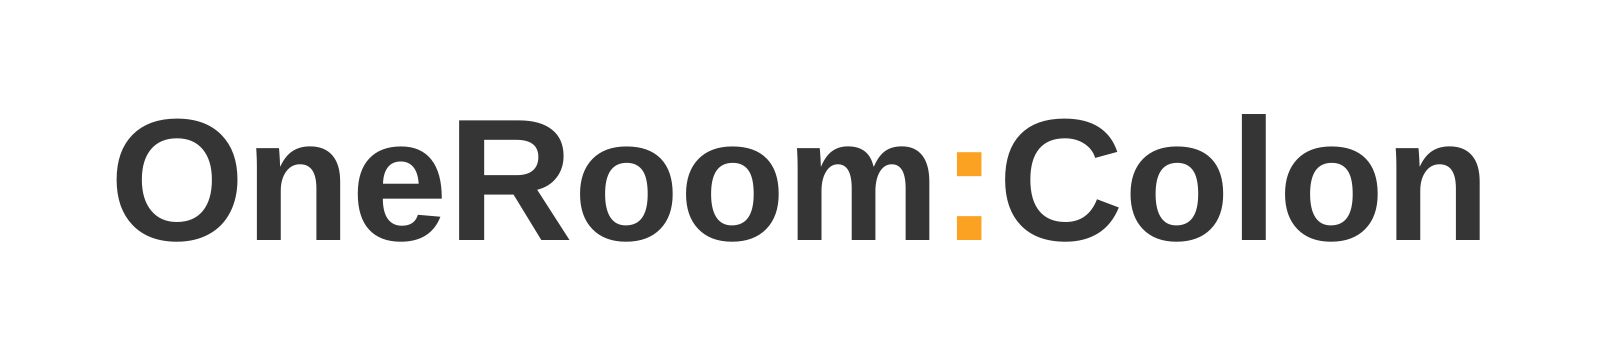 OneRoom:Colon